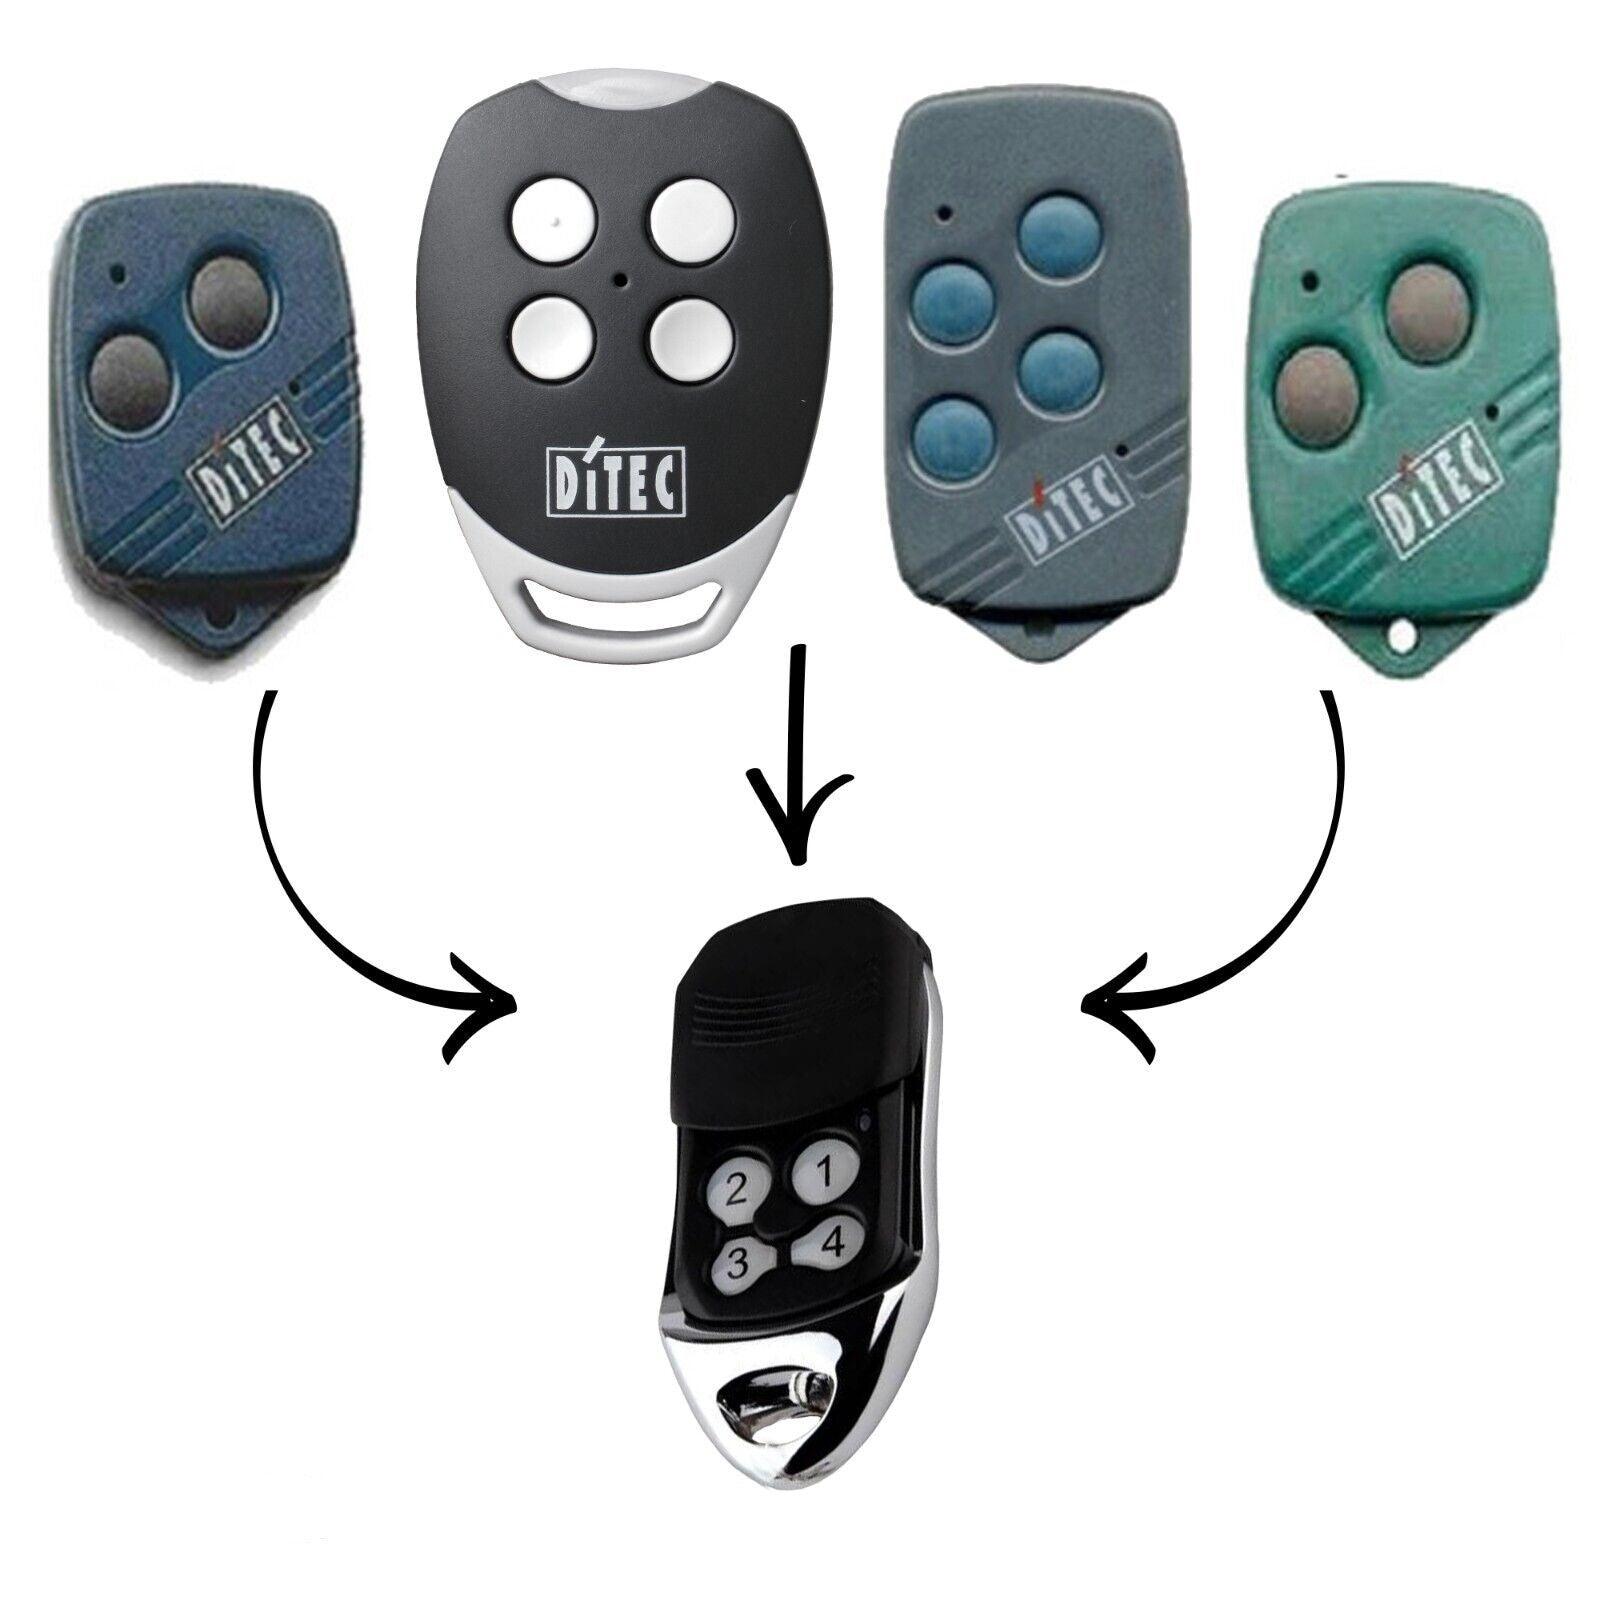 Ditec - GOL4, BIXLG4, BIXLP2 & BIXLS2 Compatible Garage/Gate Remote/Transmitter - The Remote Factory